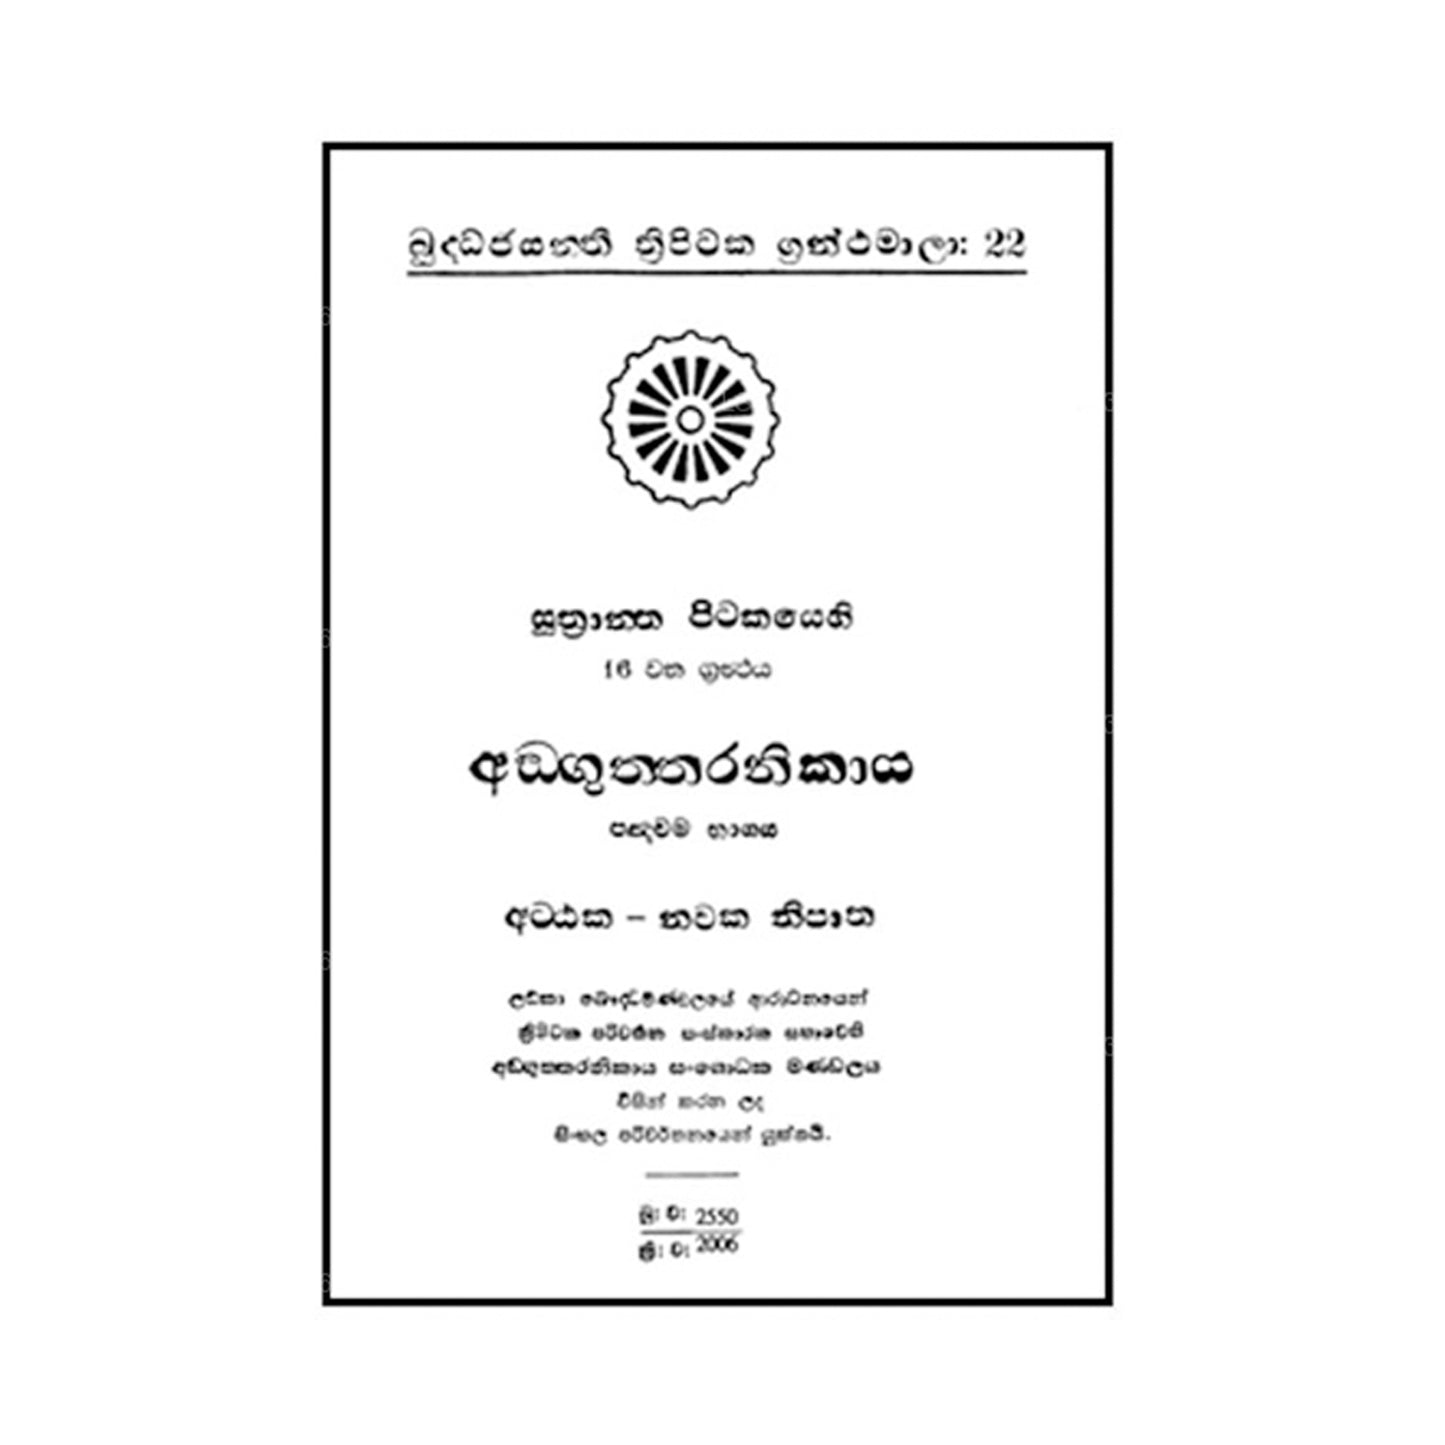 Suthra Pitakaya - Anguththara Nikaya 5